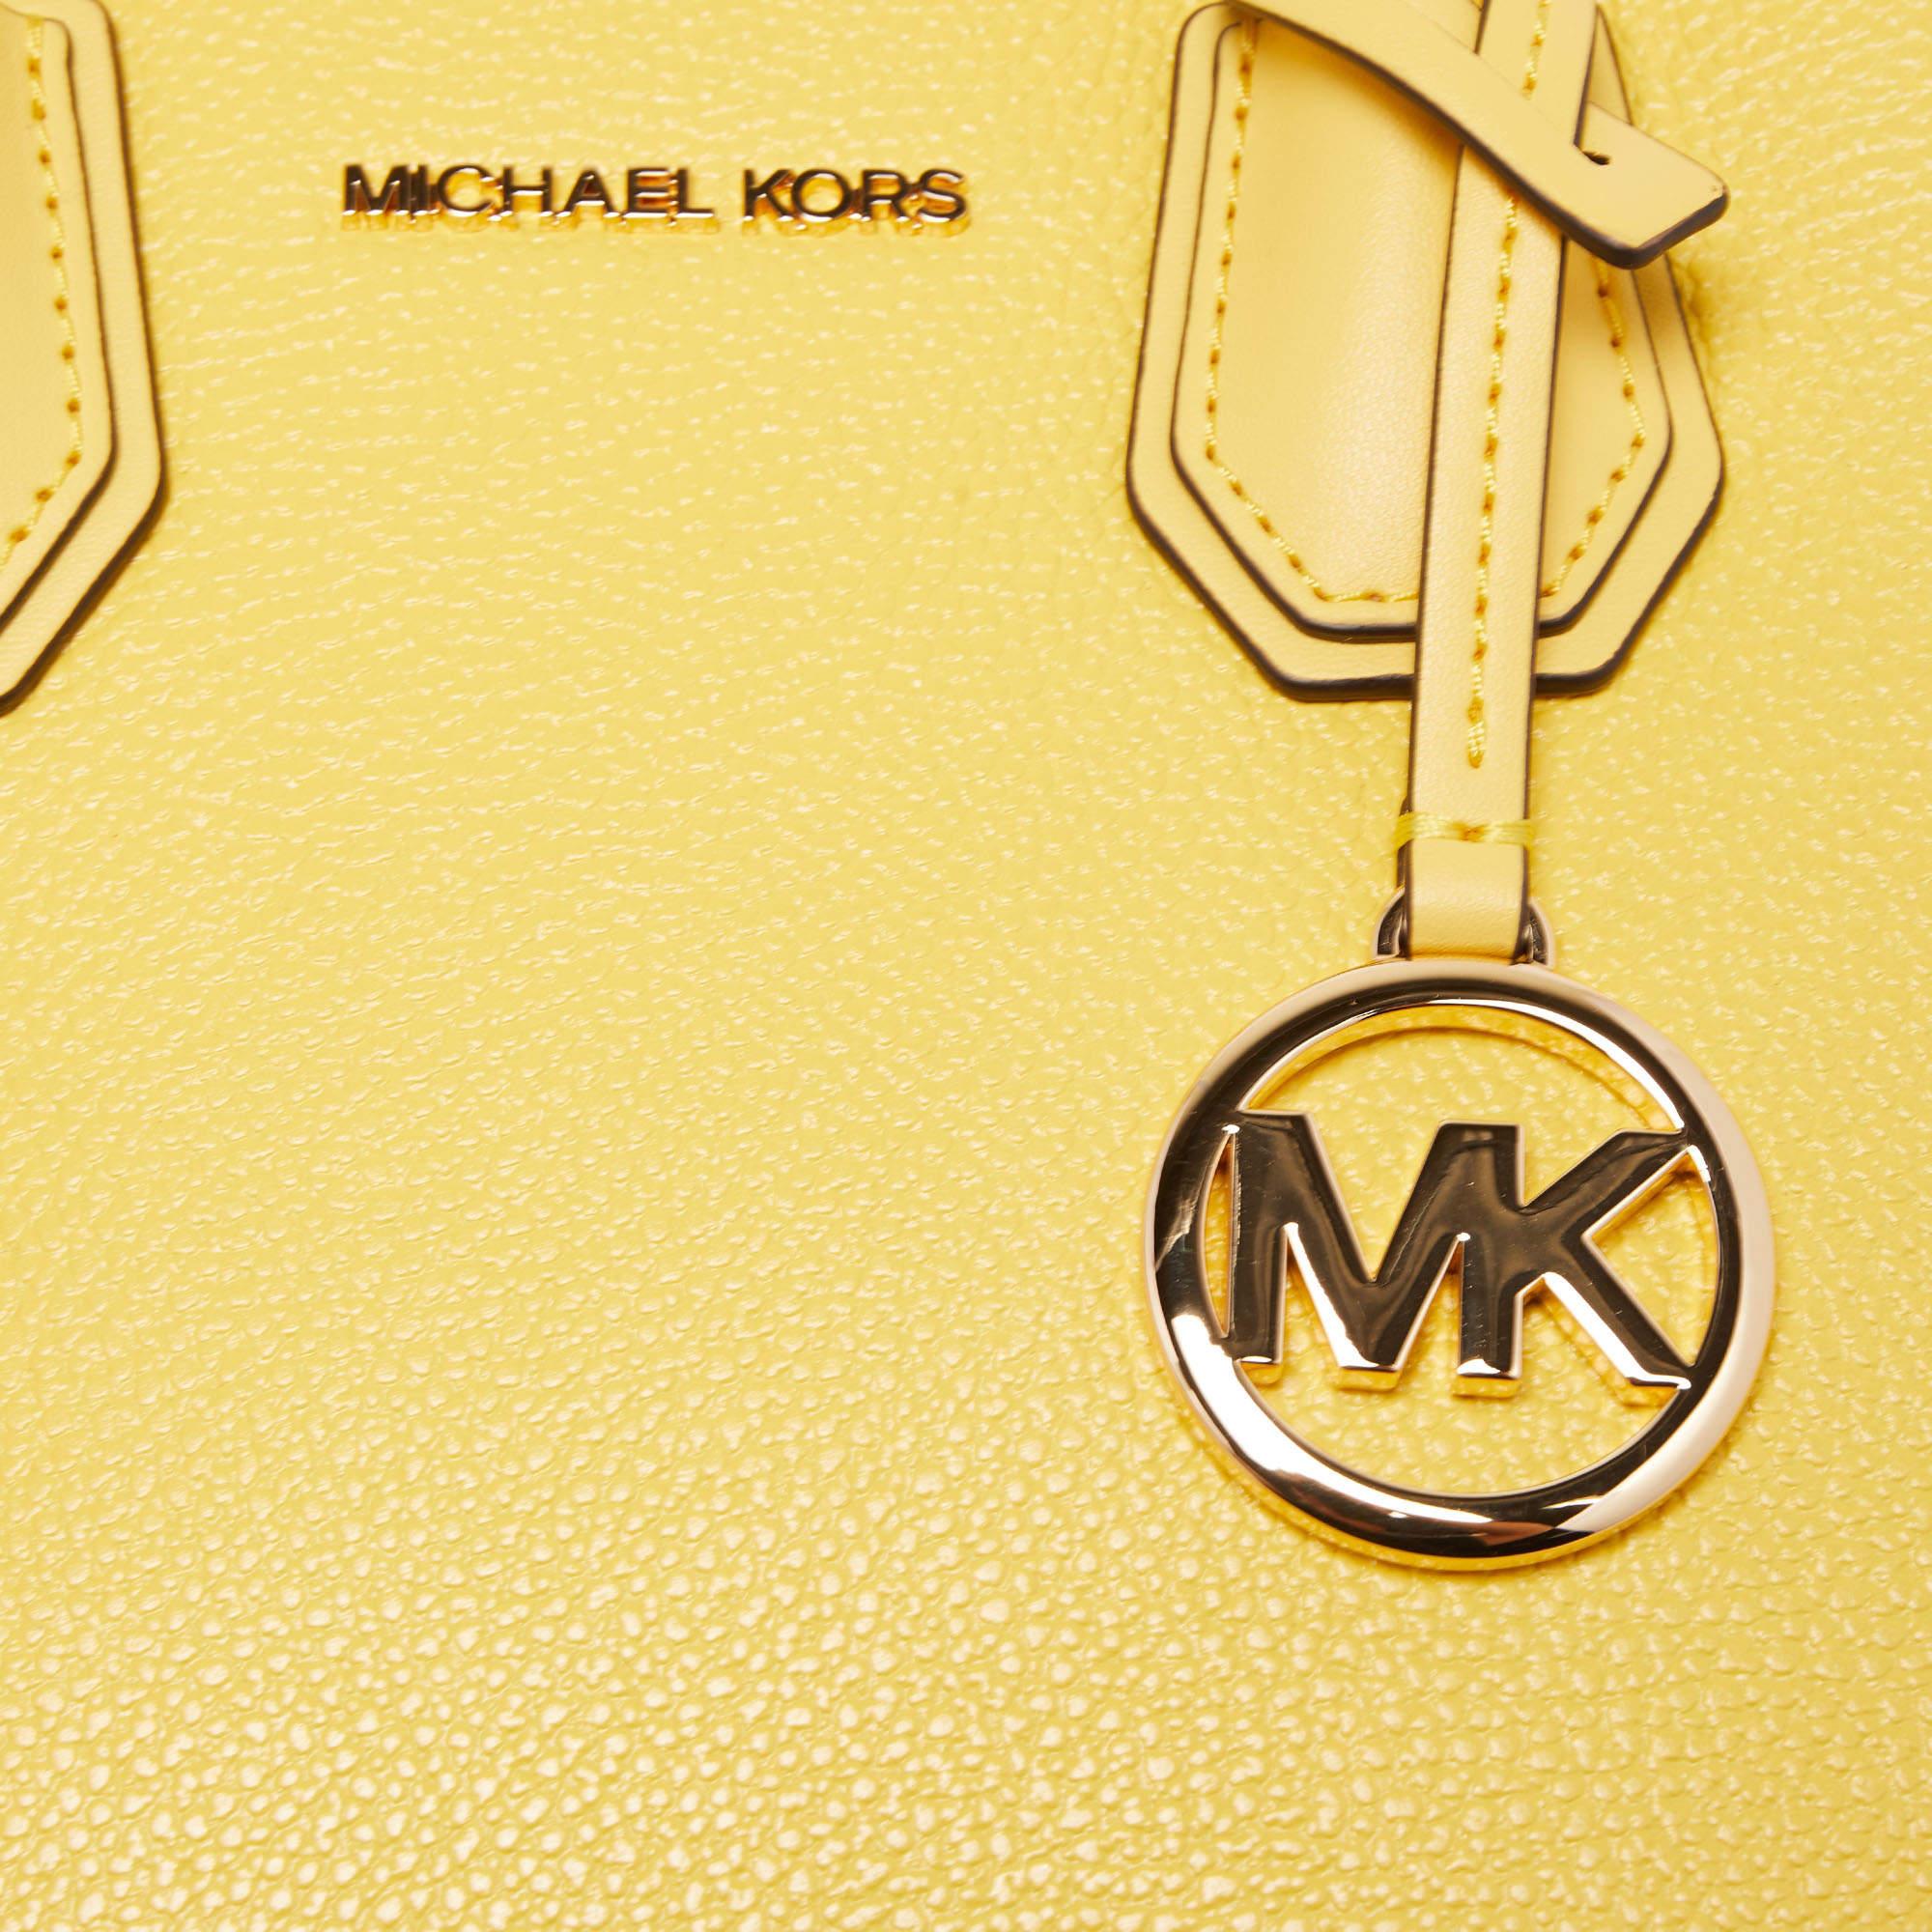 Michael Kors Yellow Leather Mercer Tote In New Condition For Sale In Dubai, Al Qouz 2